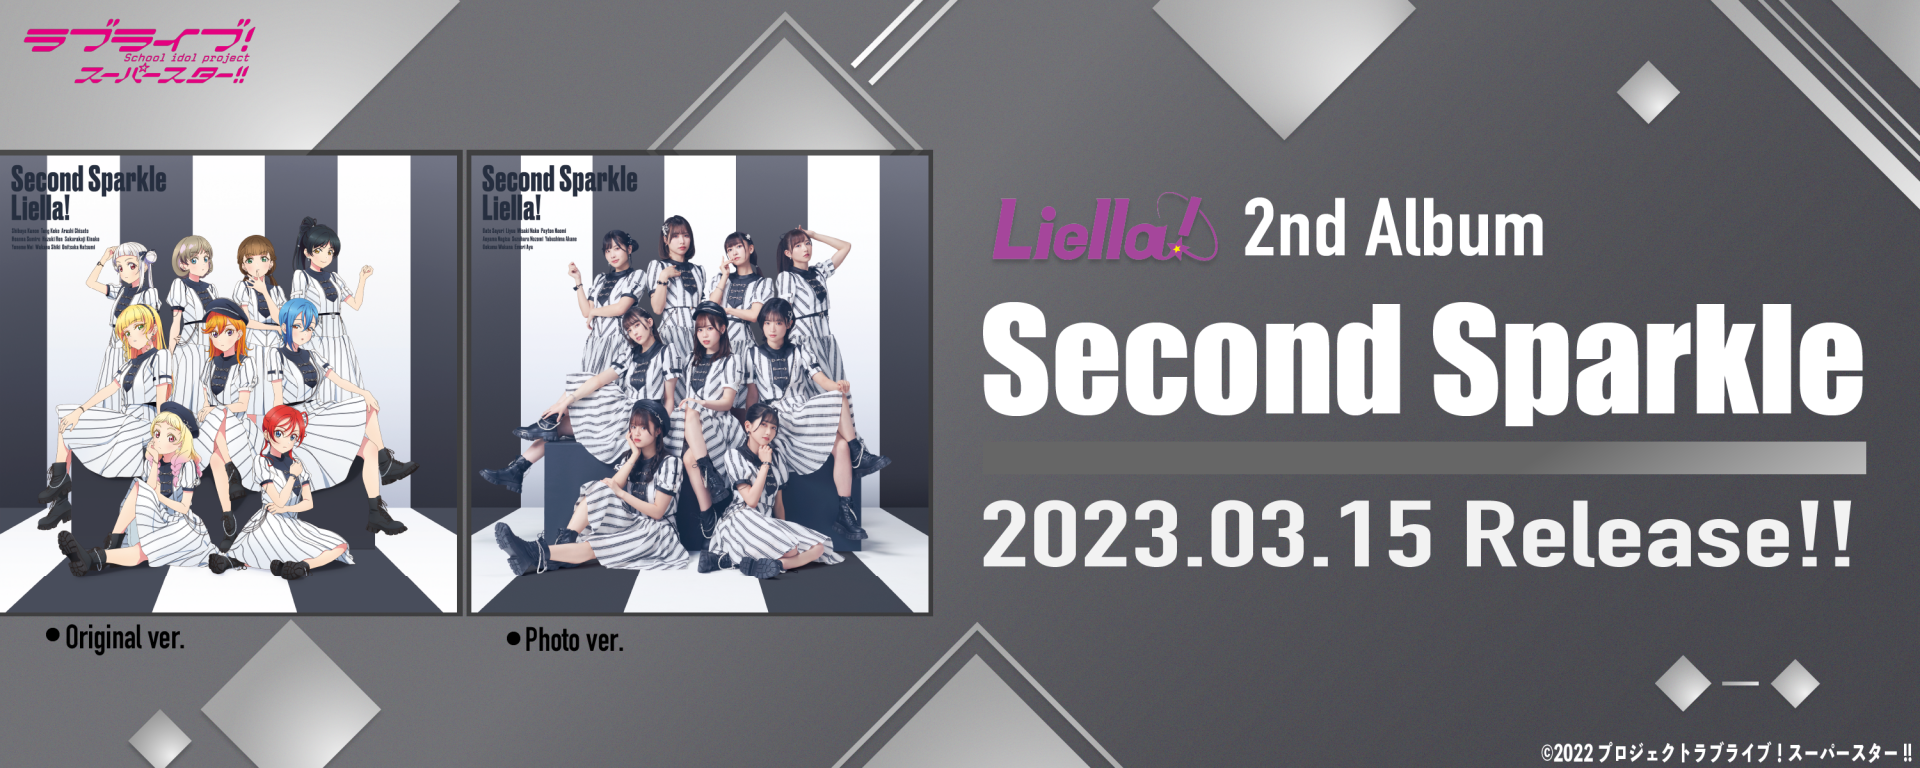 Liella! 2ndアルバム「Second Sparkle」2023.3.15 Release!!